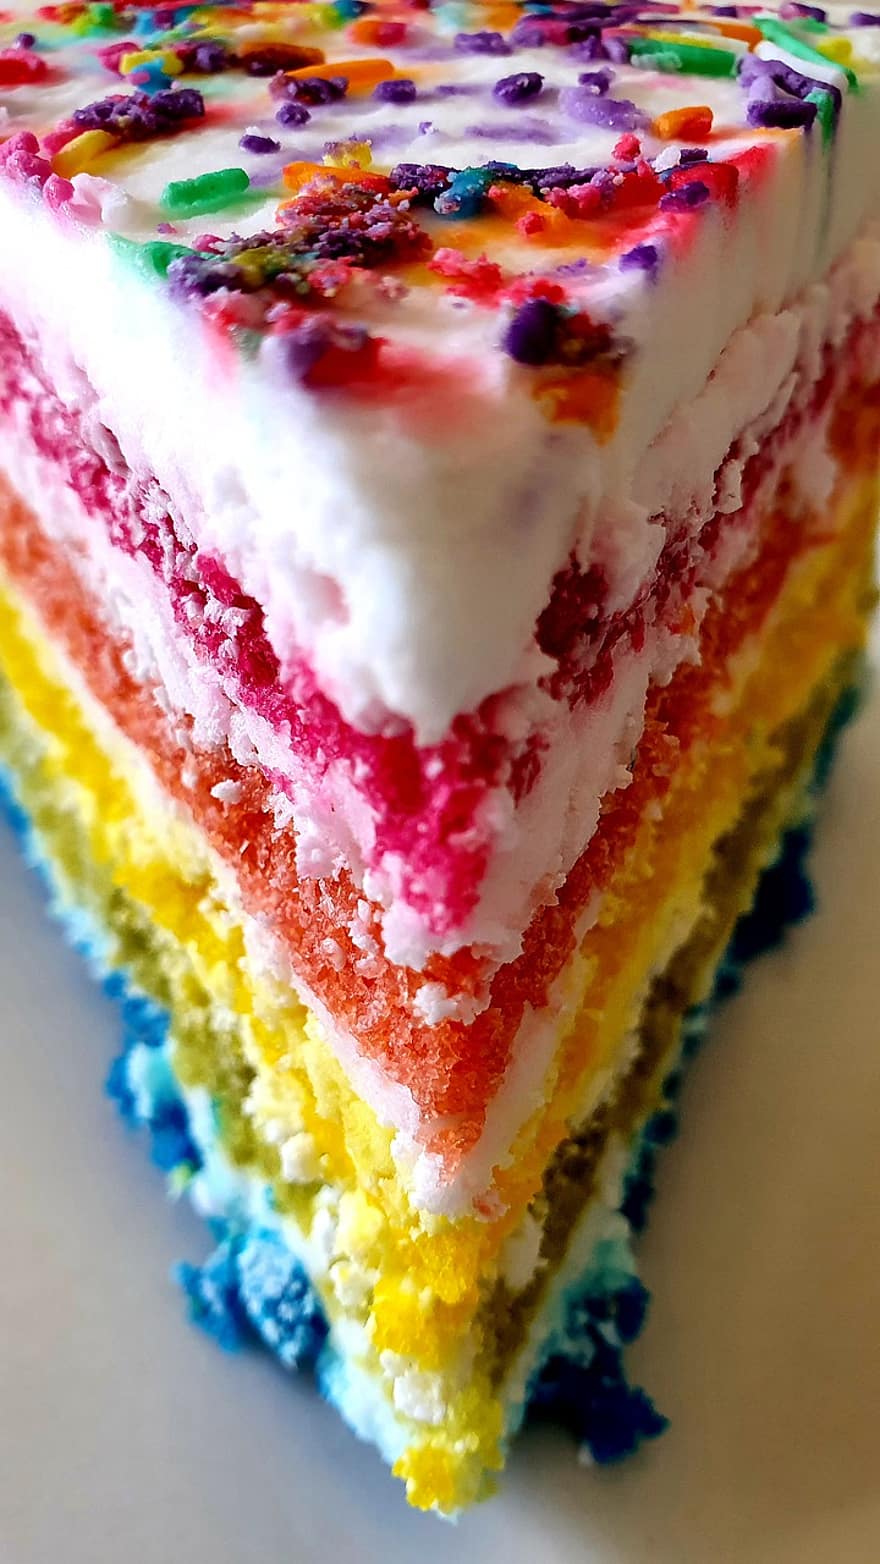 LGBT, LHBTI, regnbue kake, regnbue, kake, baking, bakeri, dessert, gourmet, søt mat, mat